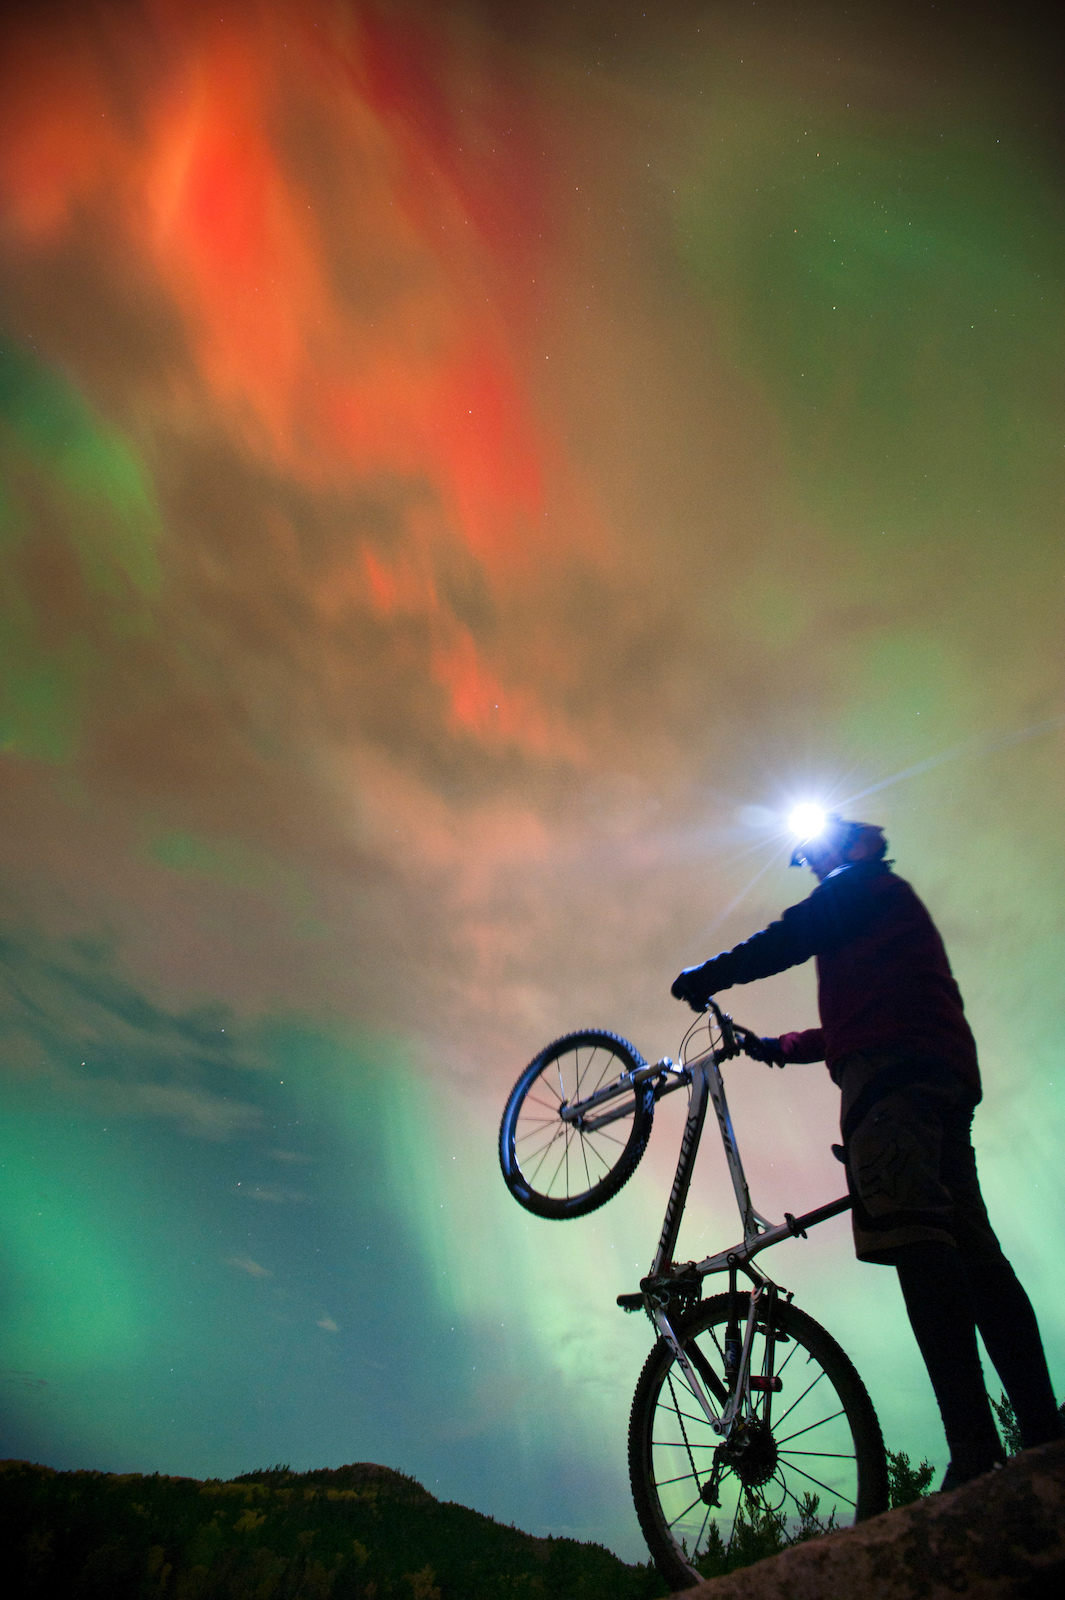 Night mountain bike riding with aurora borealis northern lights near Marquette Michigan.